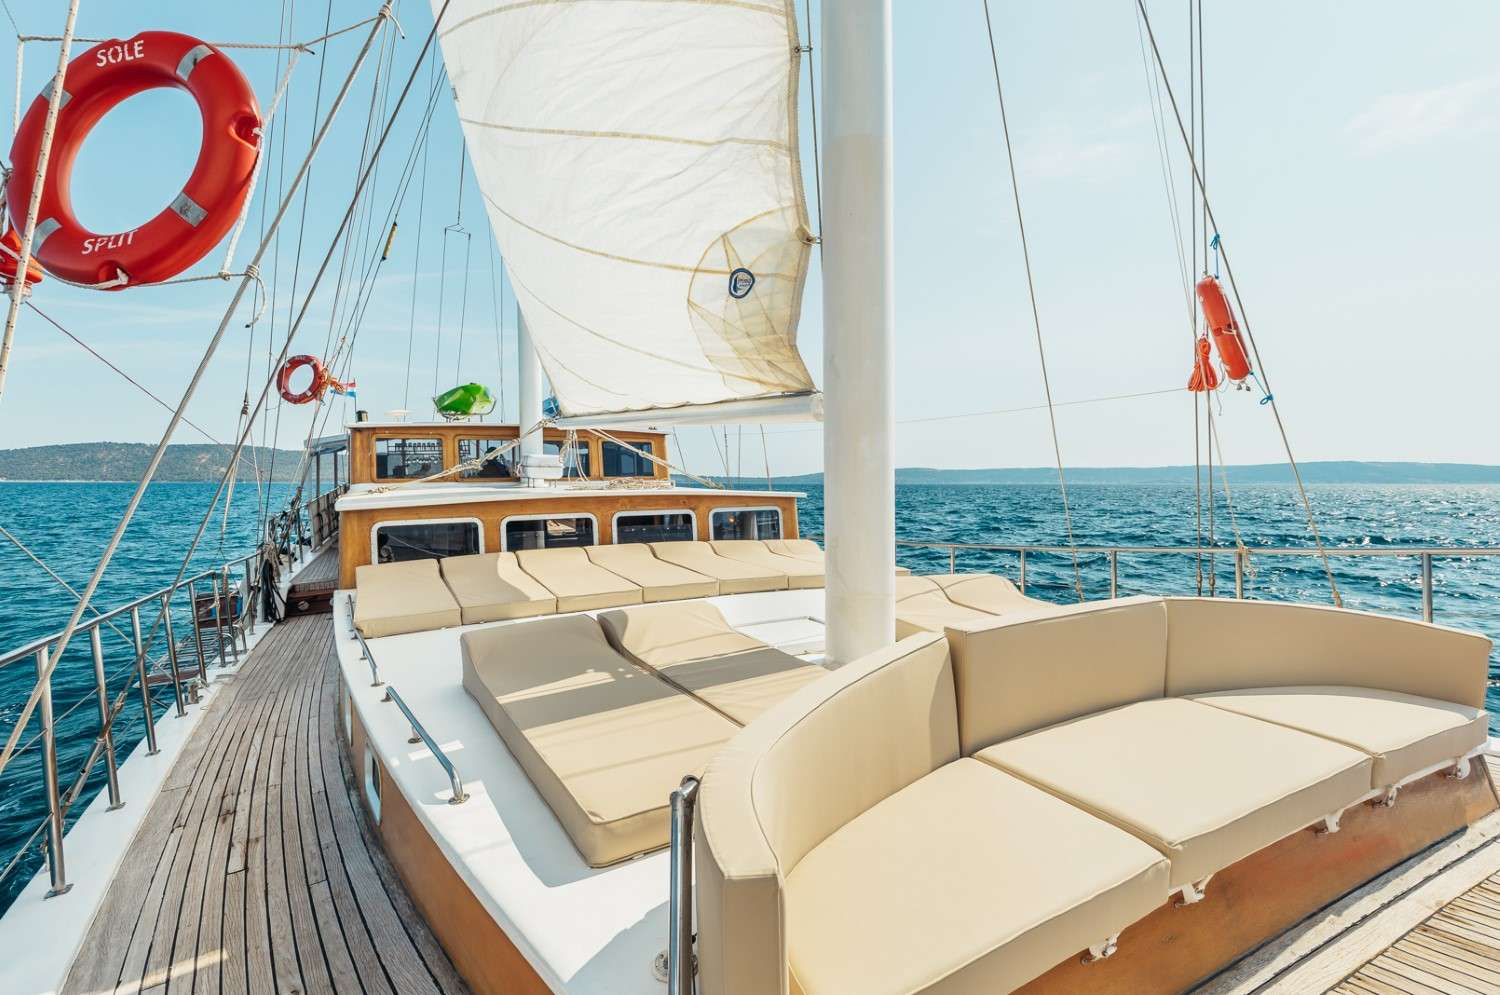 Sole  - Yacht Charter Solta & Boat hire in Croatia 5